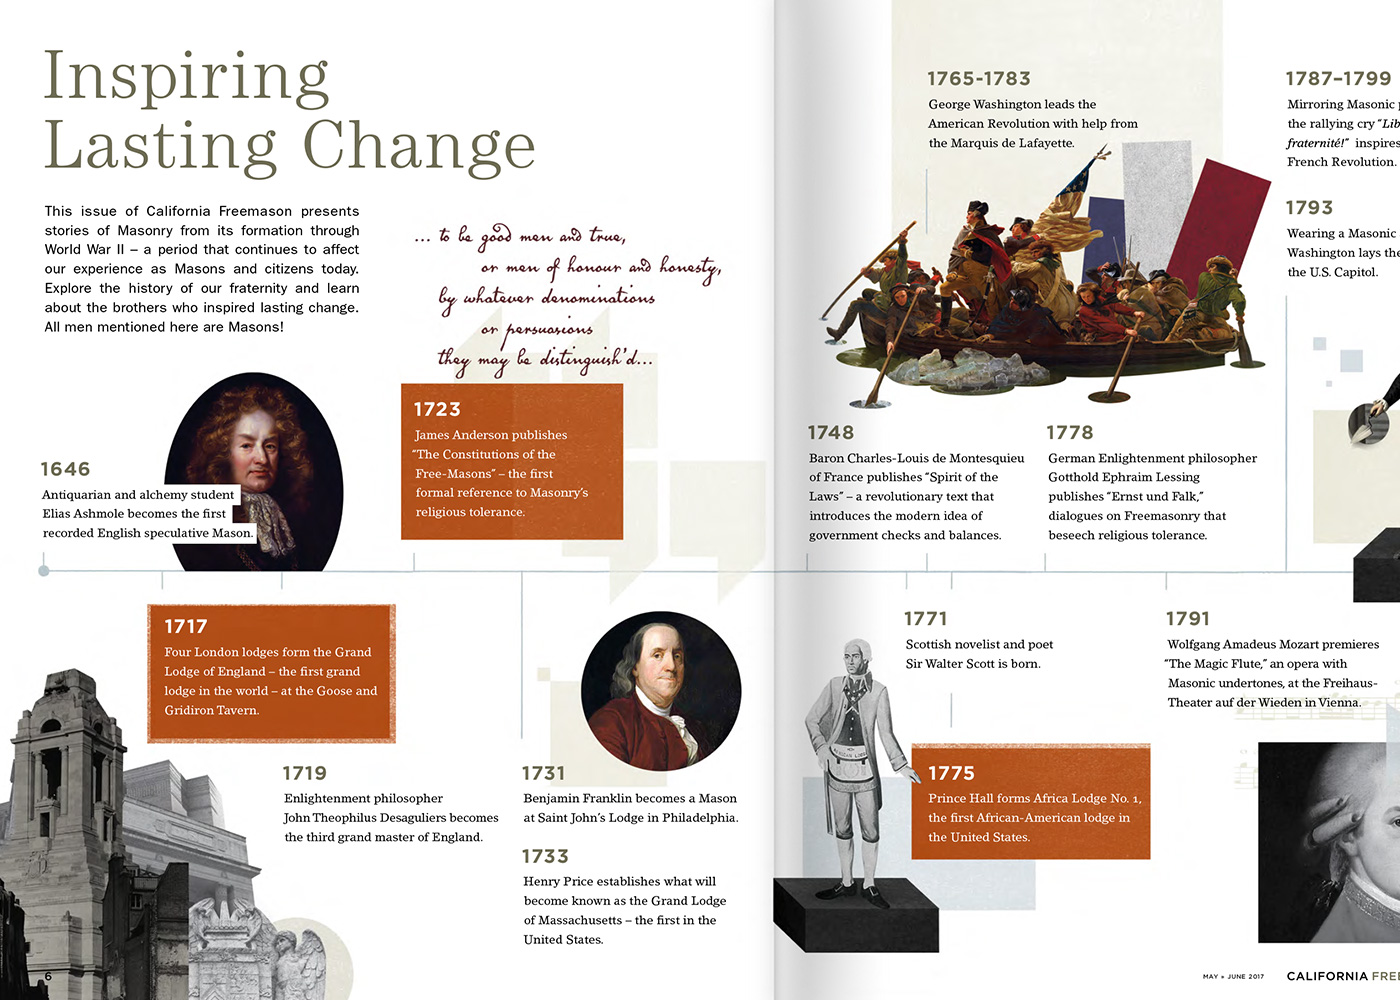 California Freemason magazine spread: Inspiring Lasting Change timeline